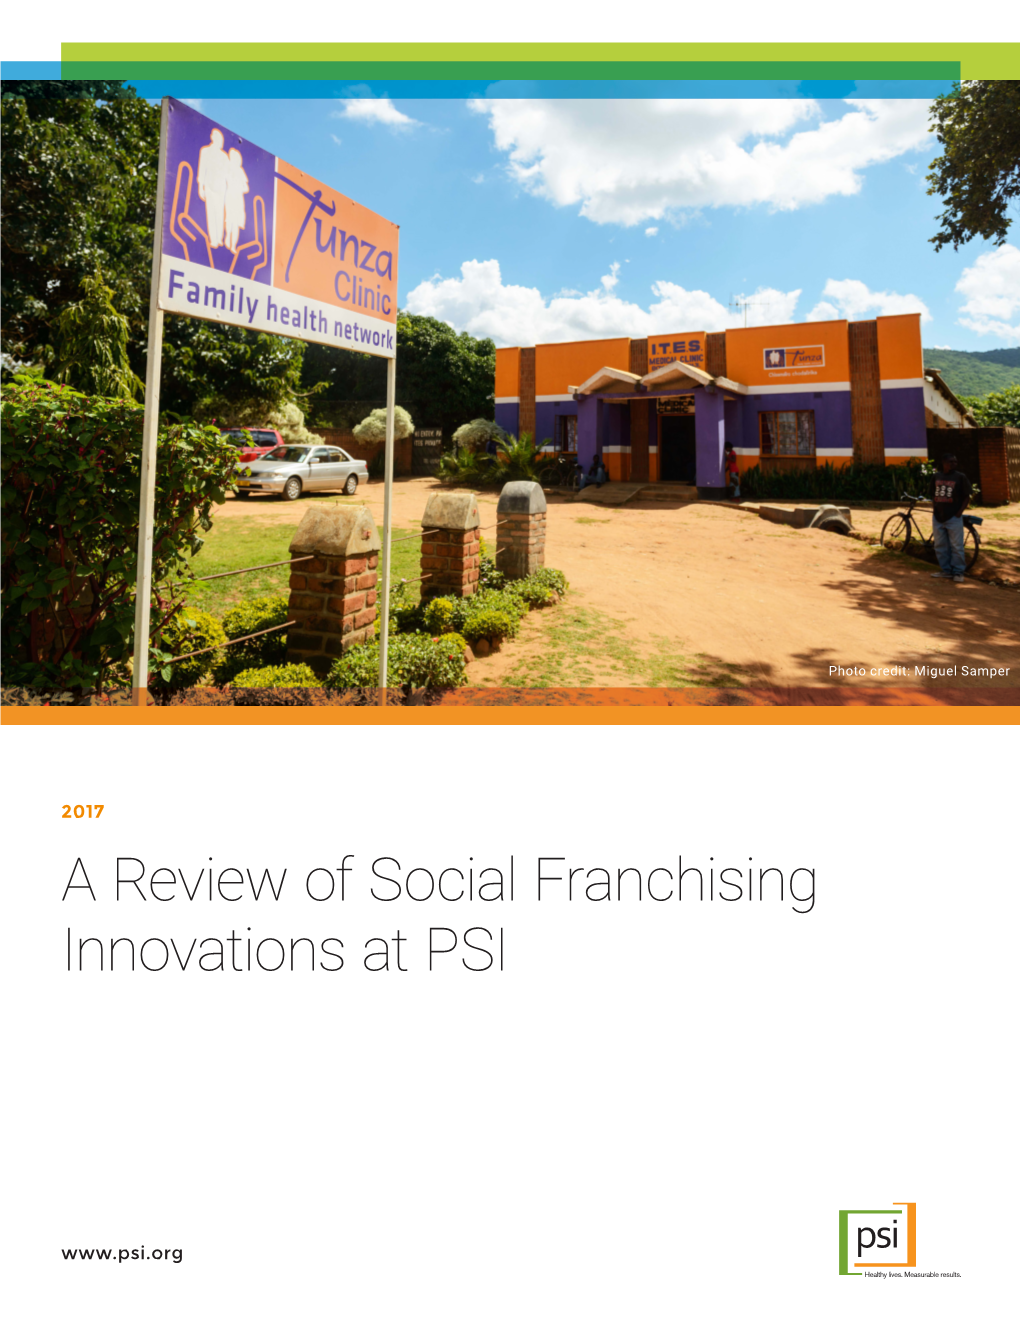 A Review of Social Franchising Innovations at PSI